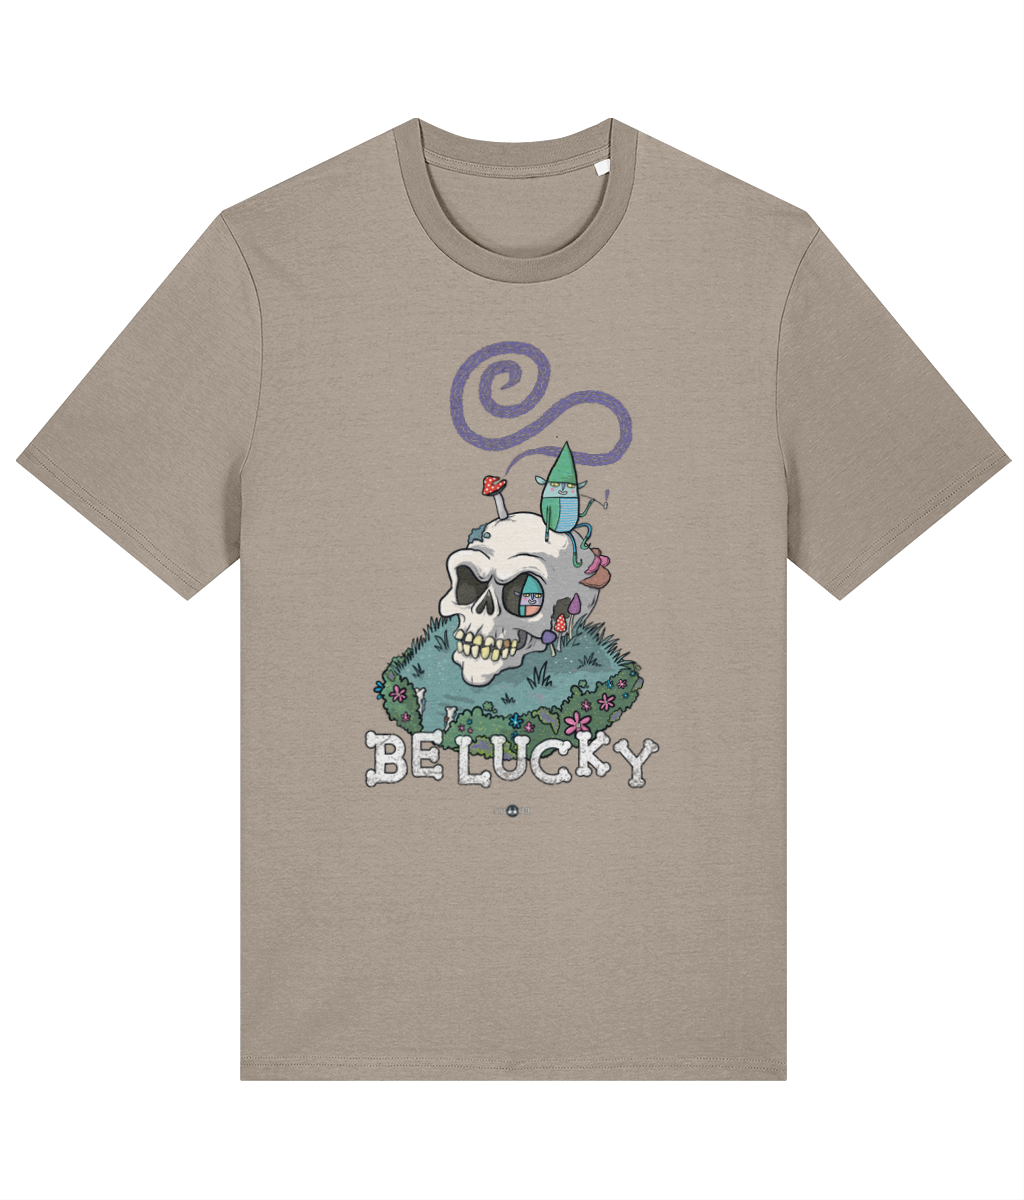 BE LUCKY - Cornish Piskie T-shirt